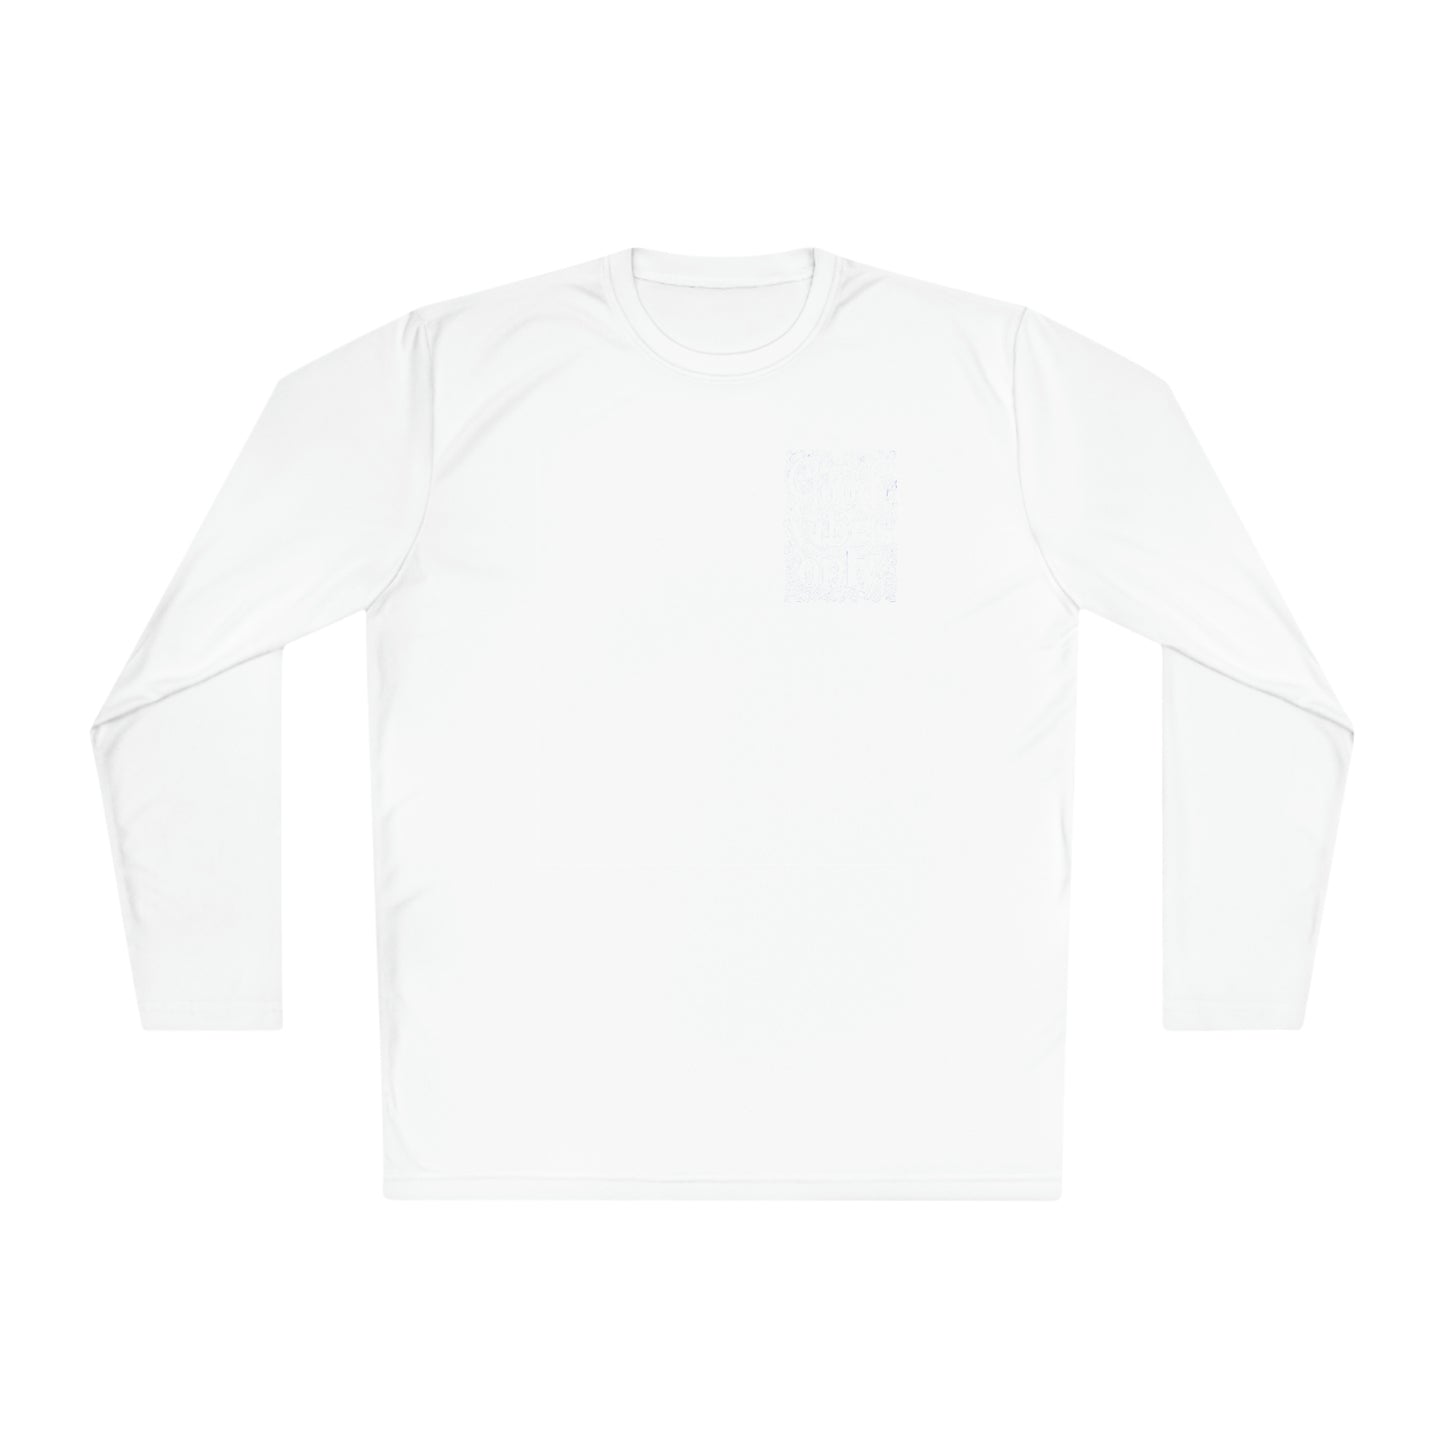 Camiseta de manga larga unisex ligera con estampado "Good Vibes Only" en ambos lados